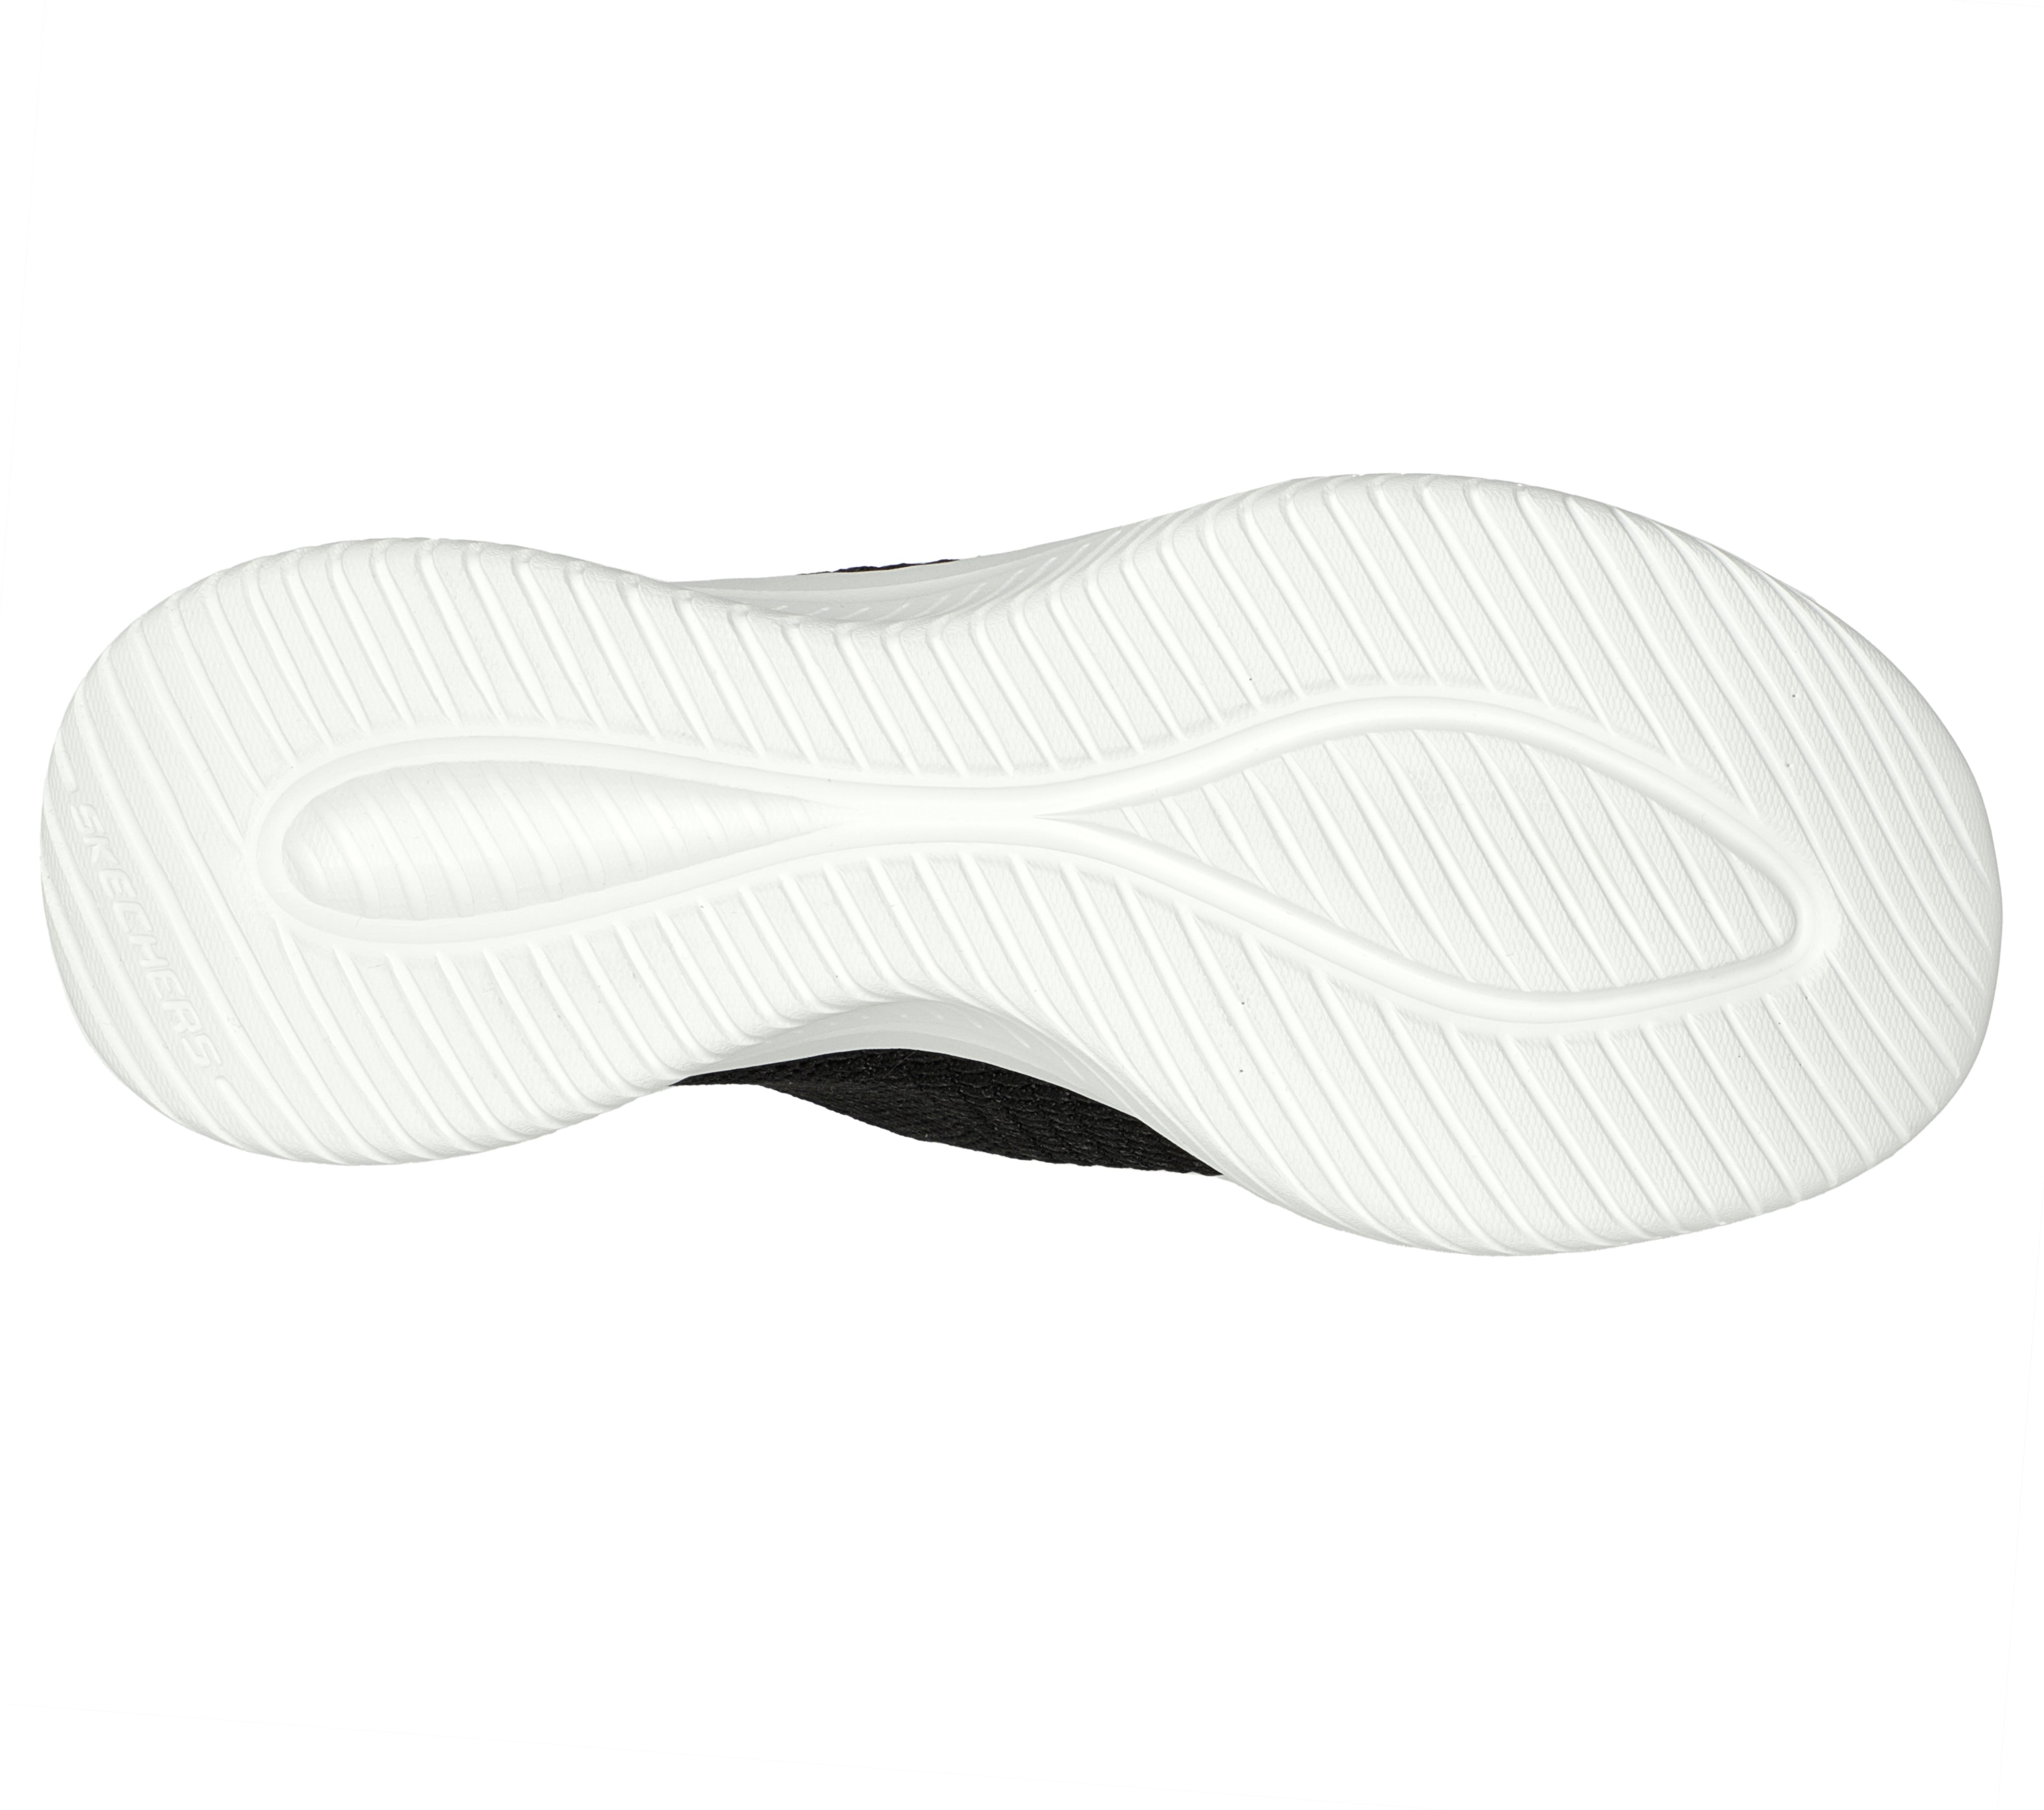 149709W BLK - SKECHERS SLIP-INS: ULTRA FLEX 3.0 - SMOOTH STEP - Shoess